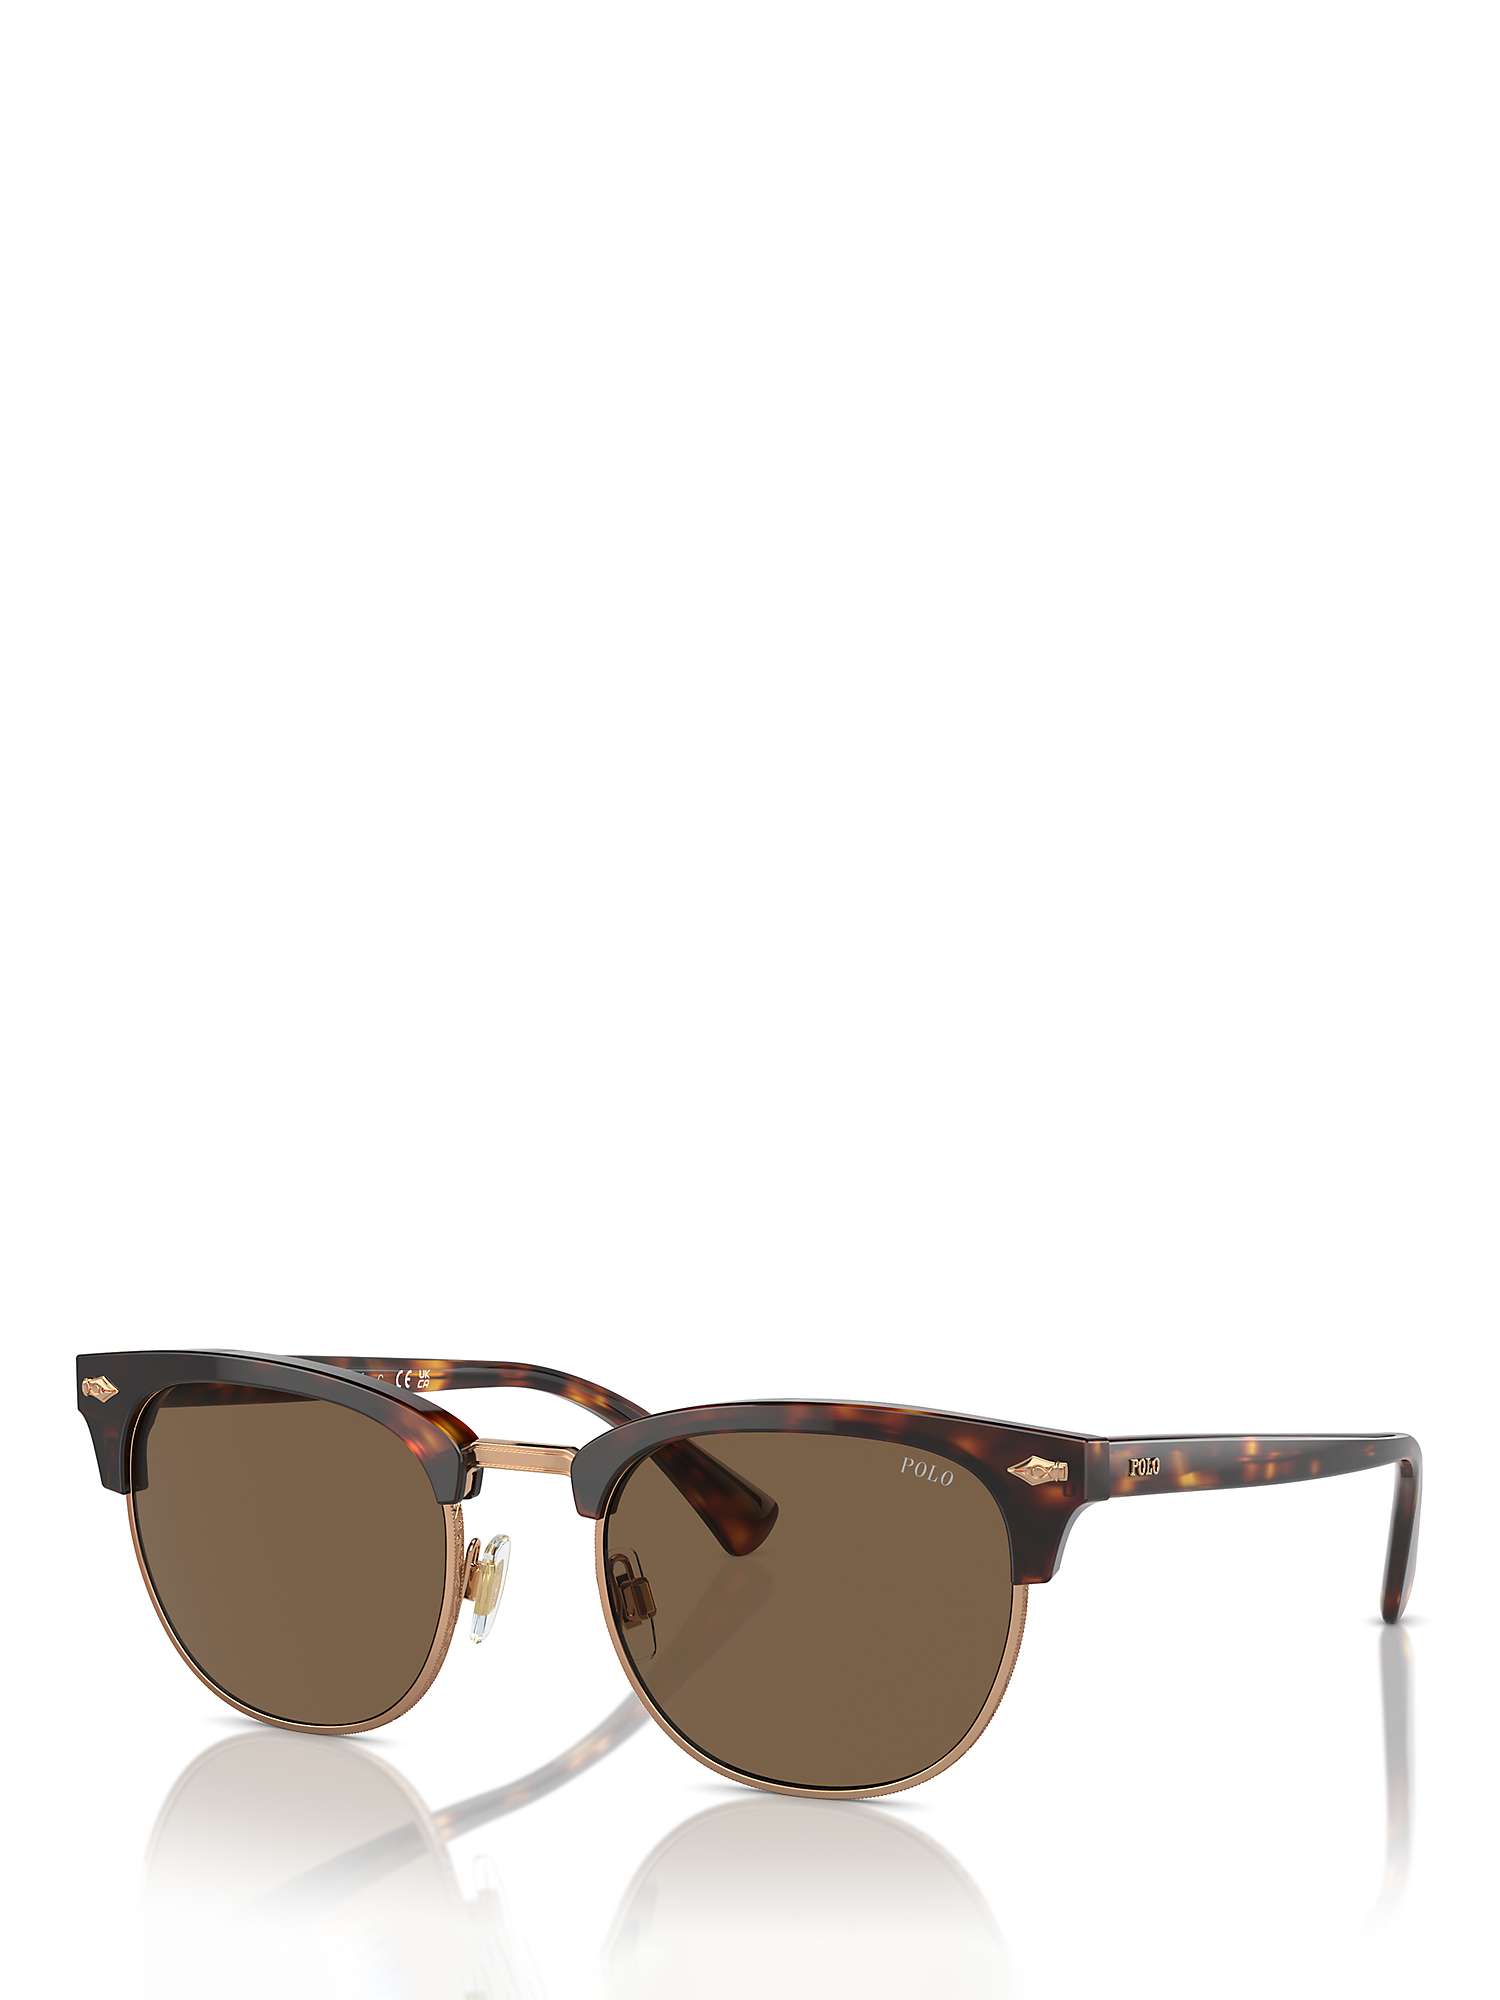 Buy Polo Ralph Lauren PH4217 Men's Oval Sunglasses Online at johnlewis.com